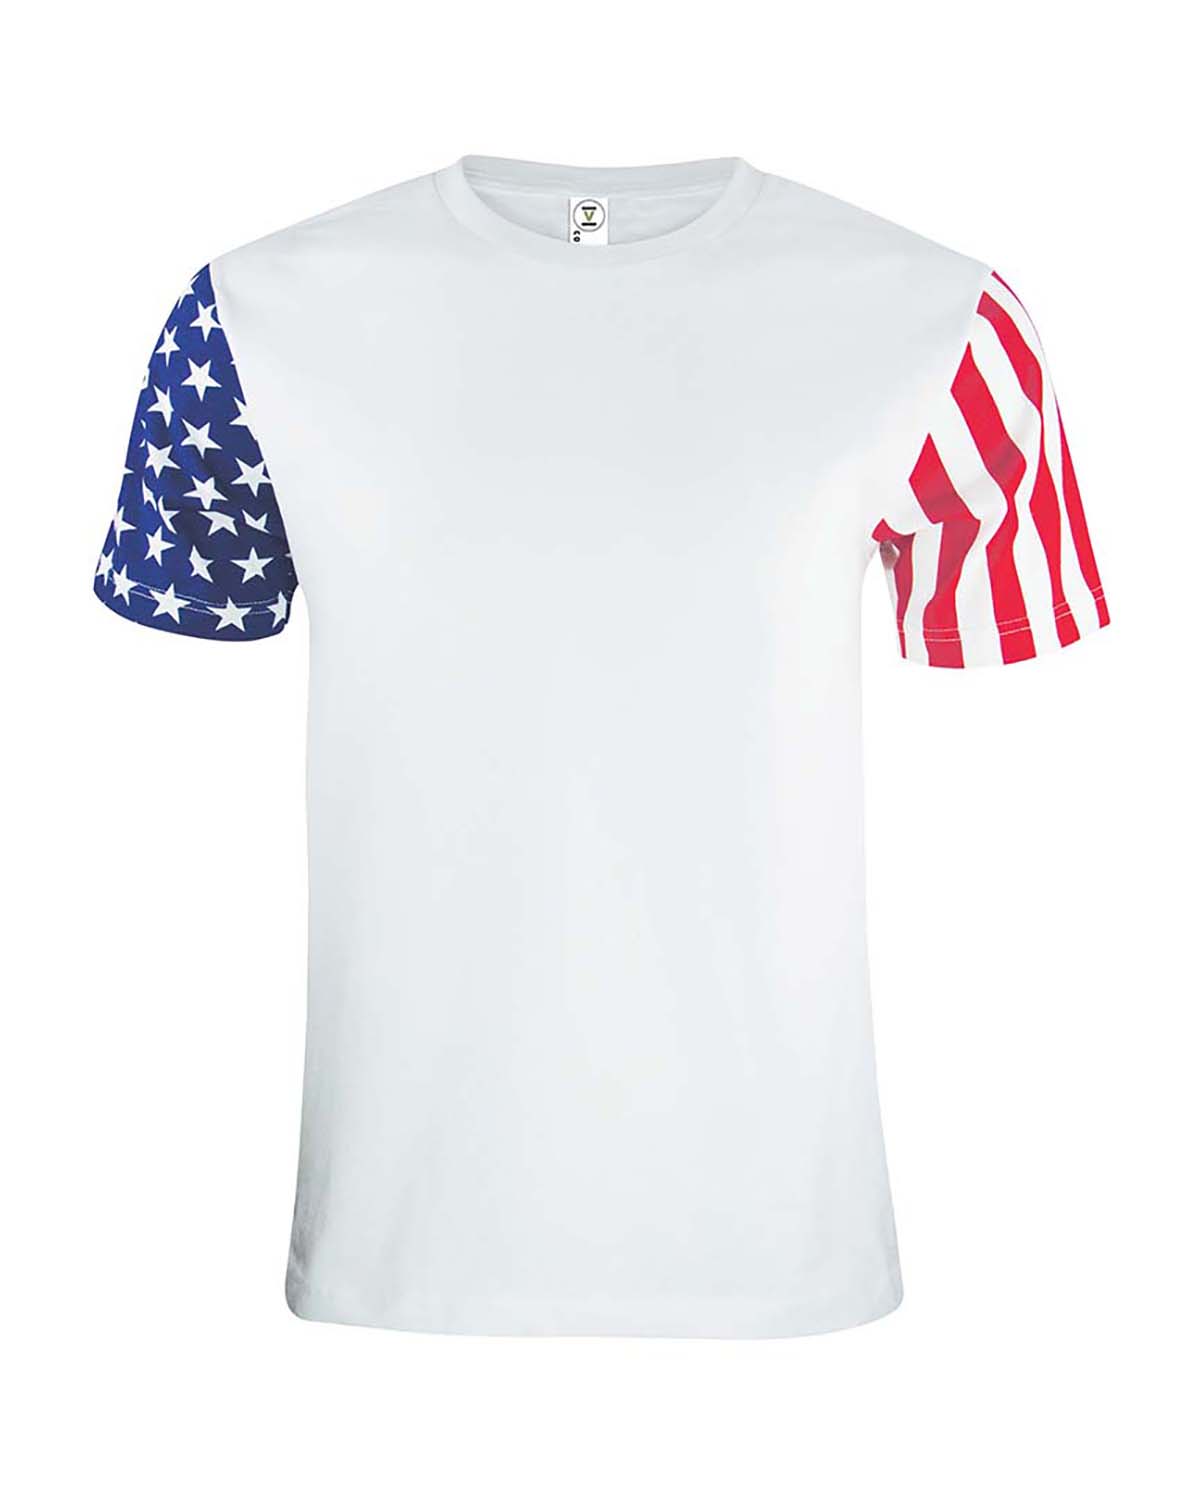 Code Five (SO) 3976 Stars / Stripes Men's Stars & Stripes T-Shirt |  JiffyShirts